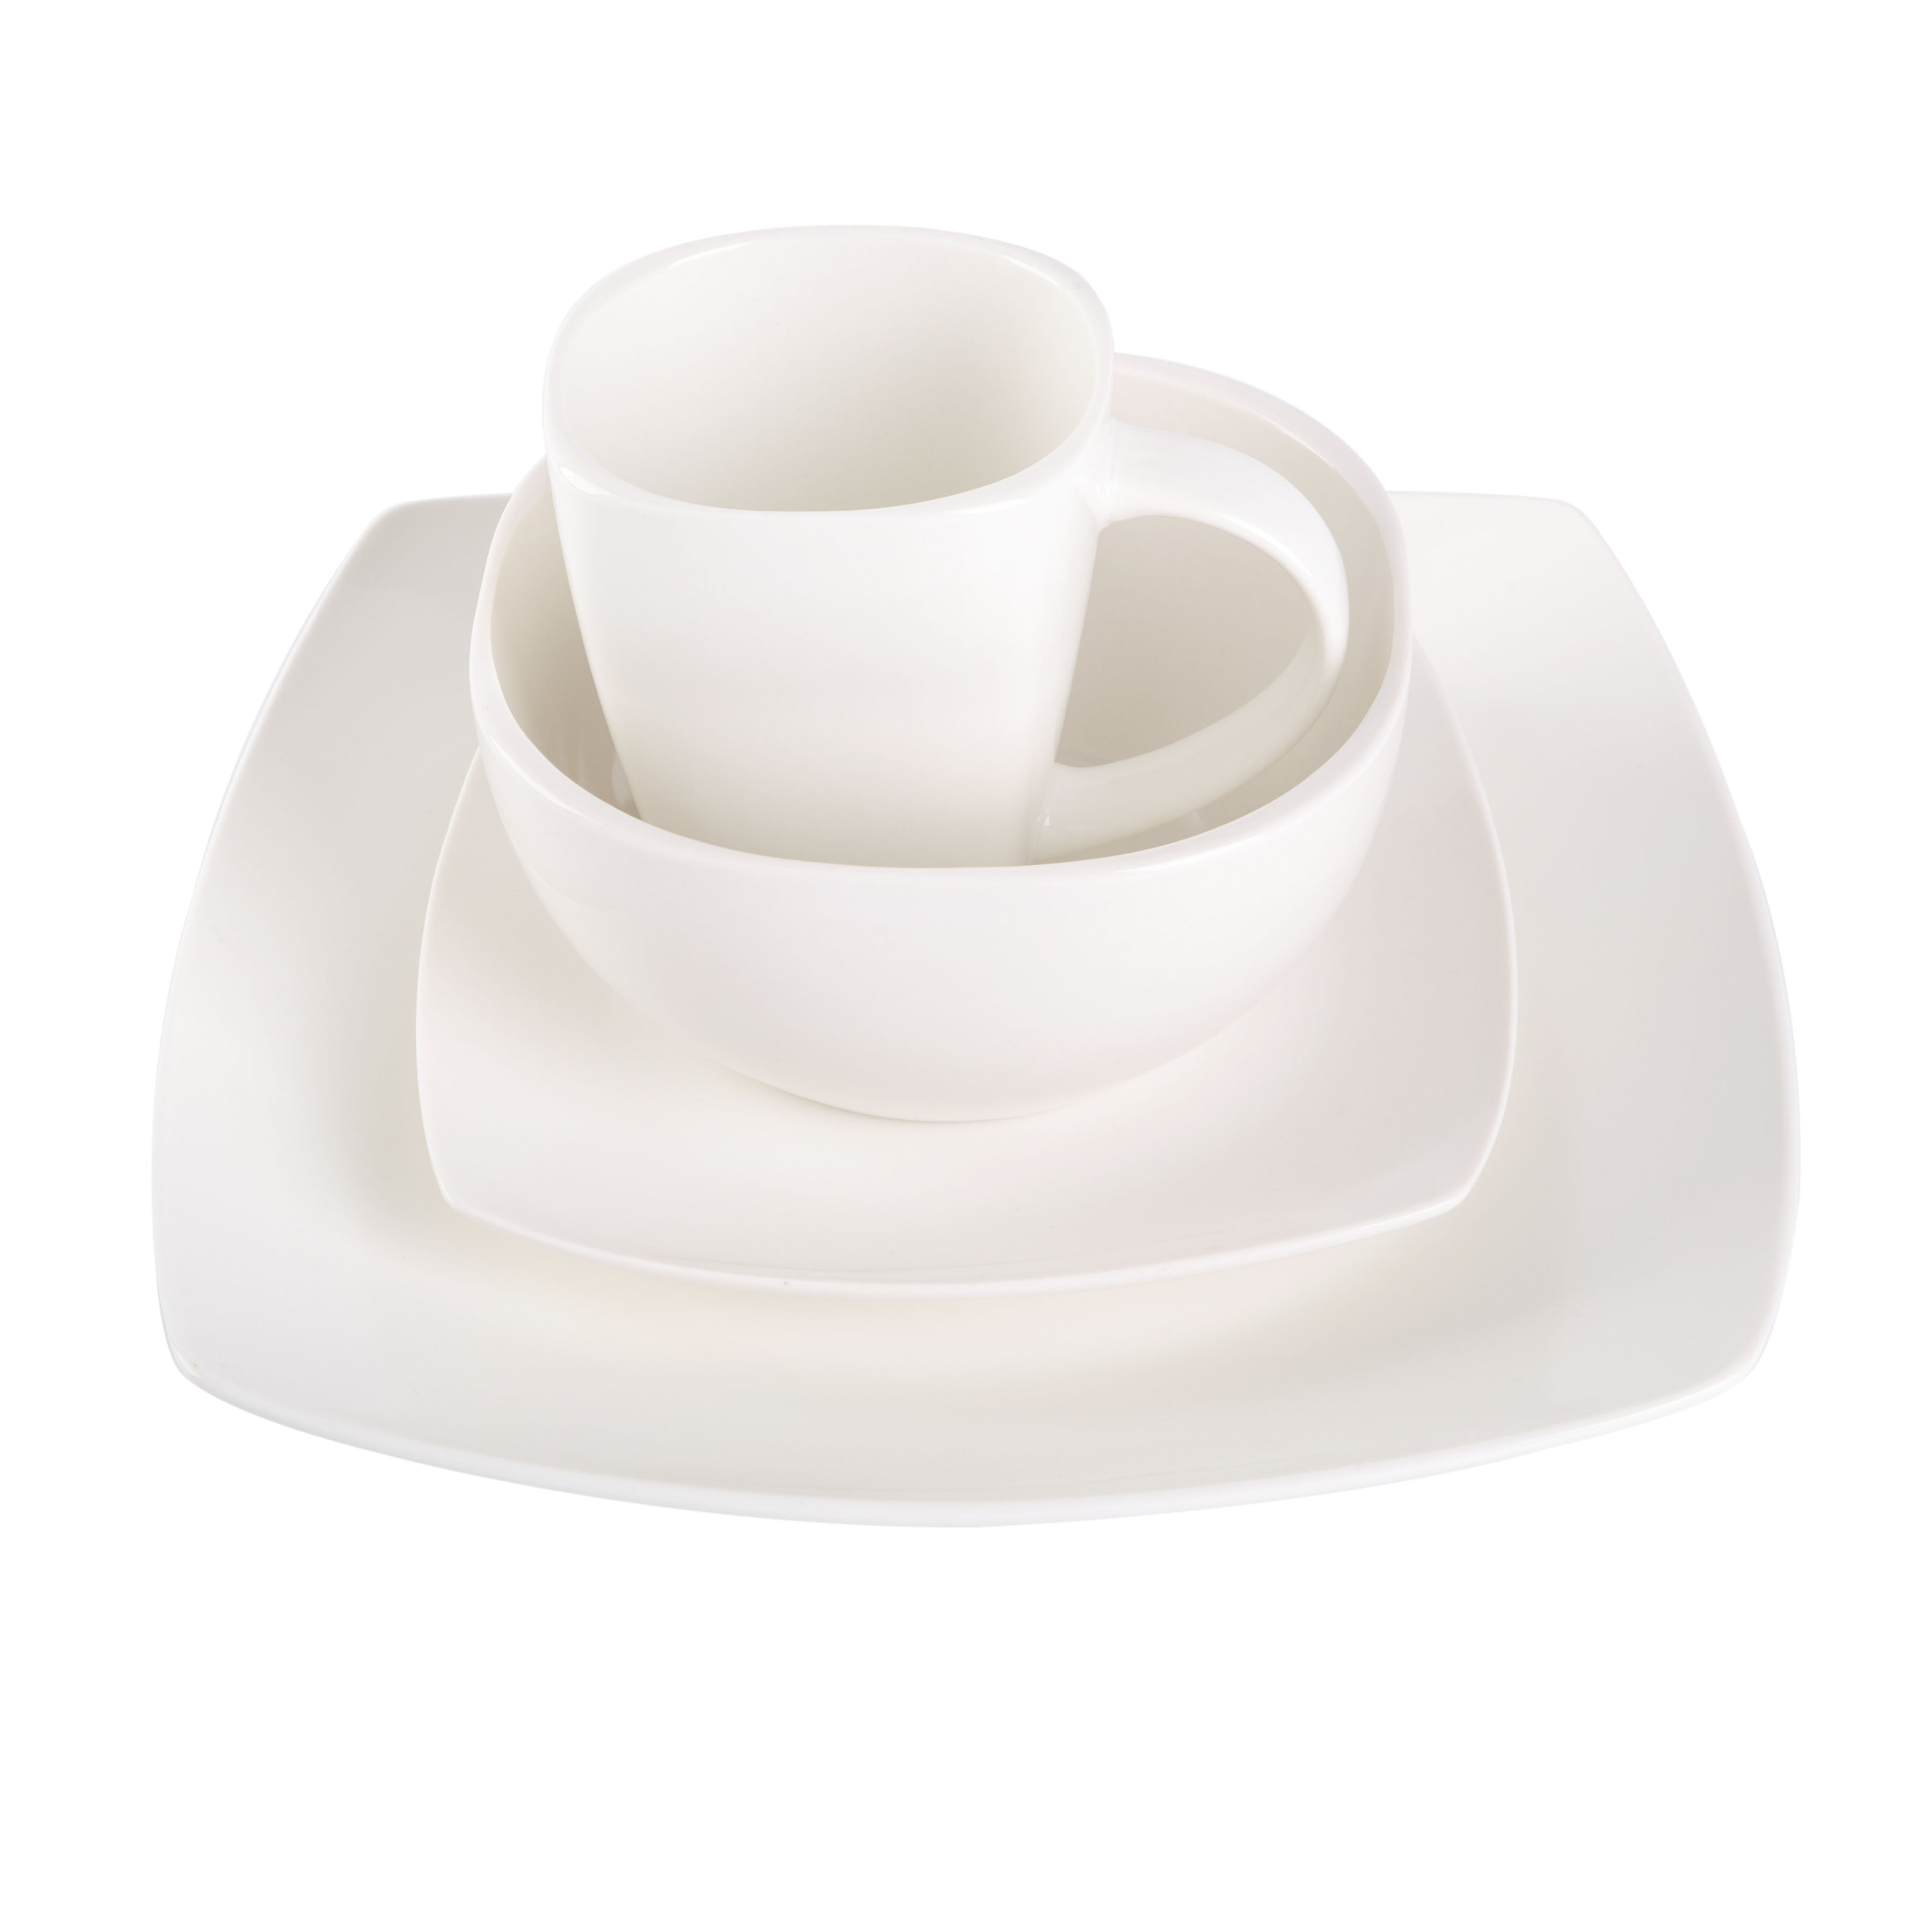 Gibson Soho Lounge Square 16-Piece Porcelain Dinnerware Set - White